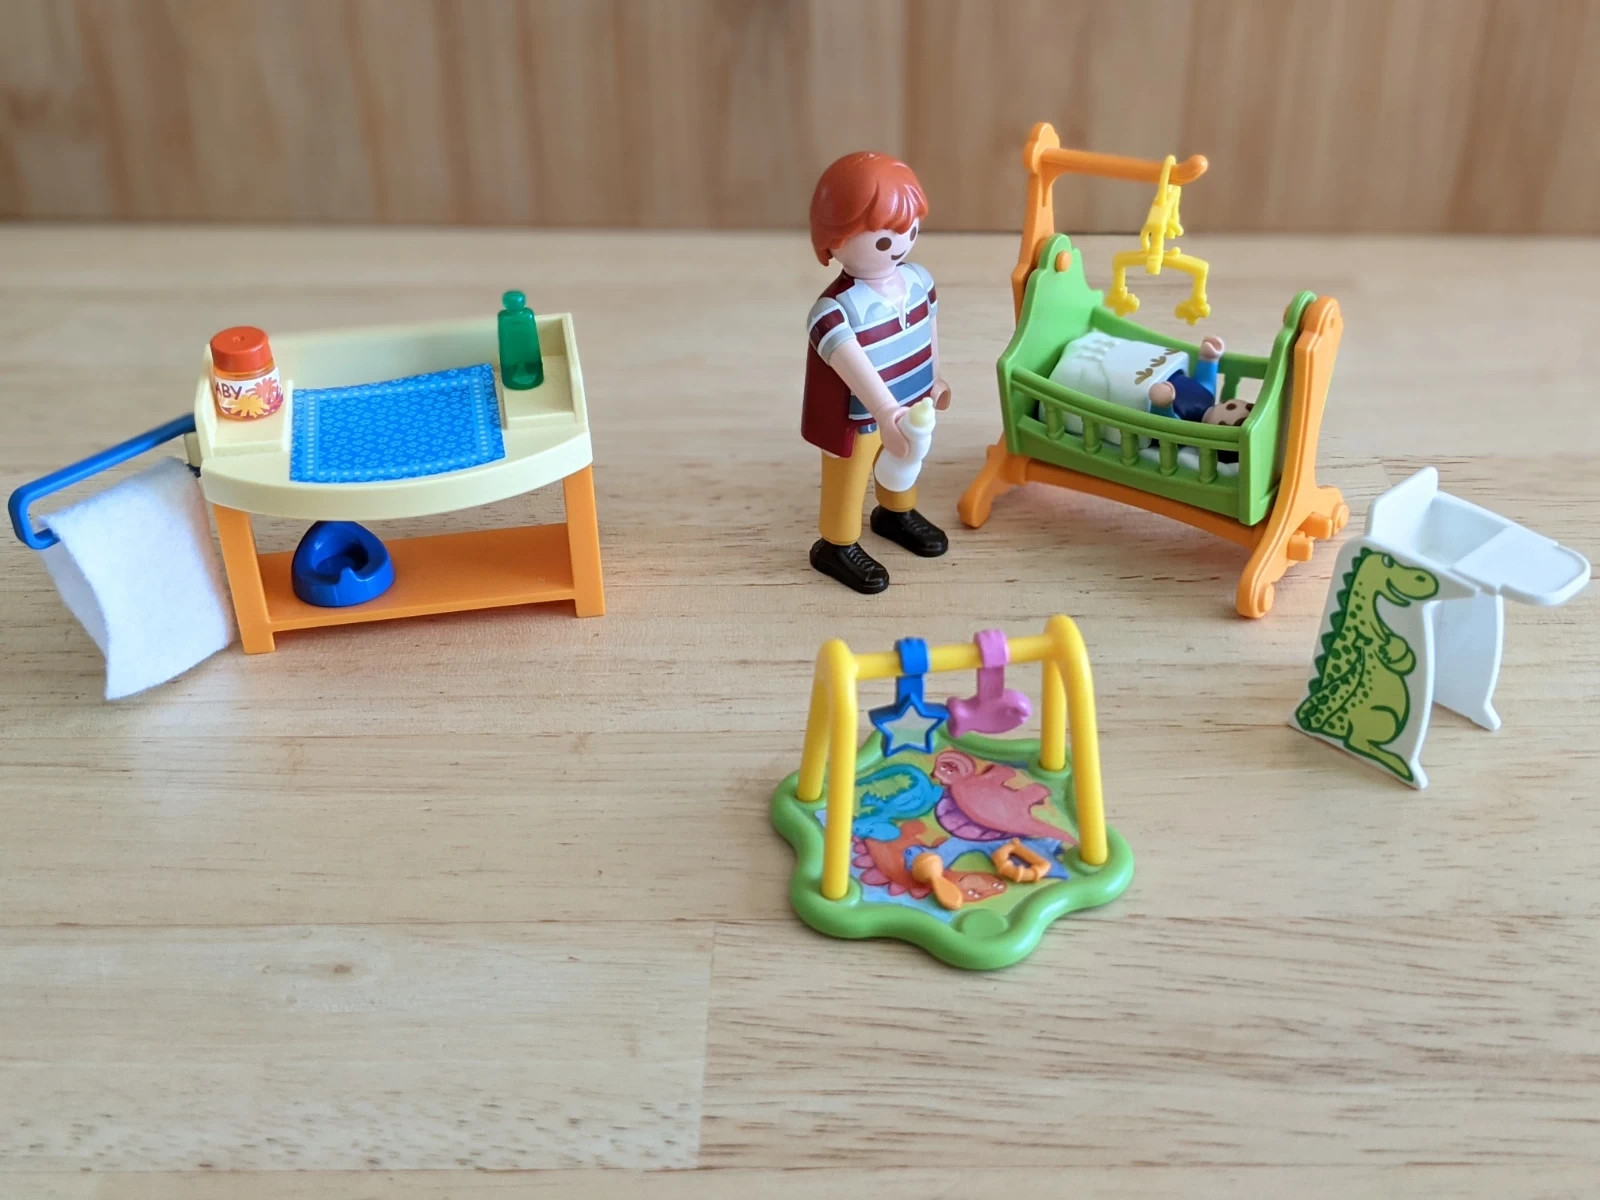 Playmobil : Chambre de bébé (5304) Toys